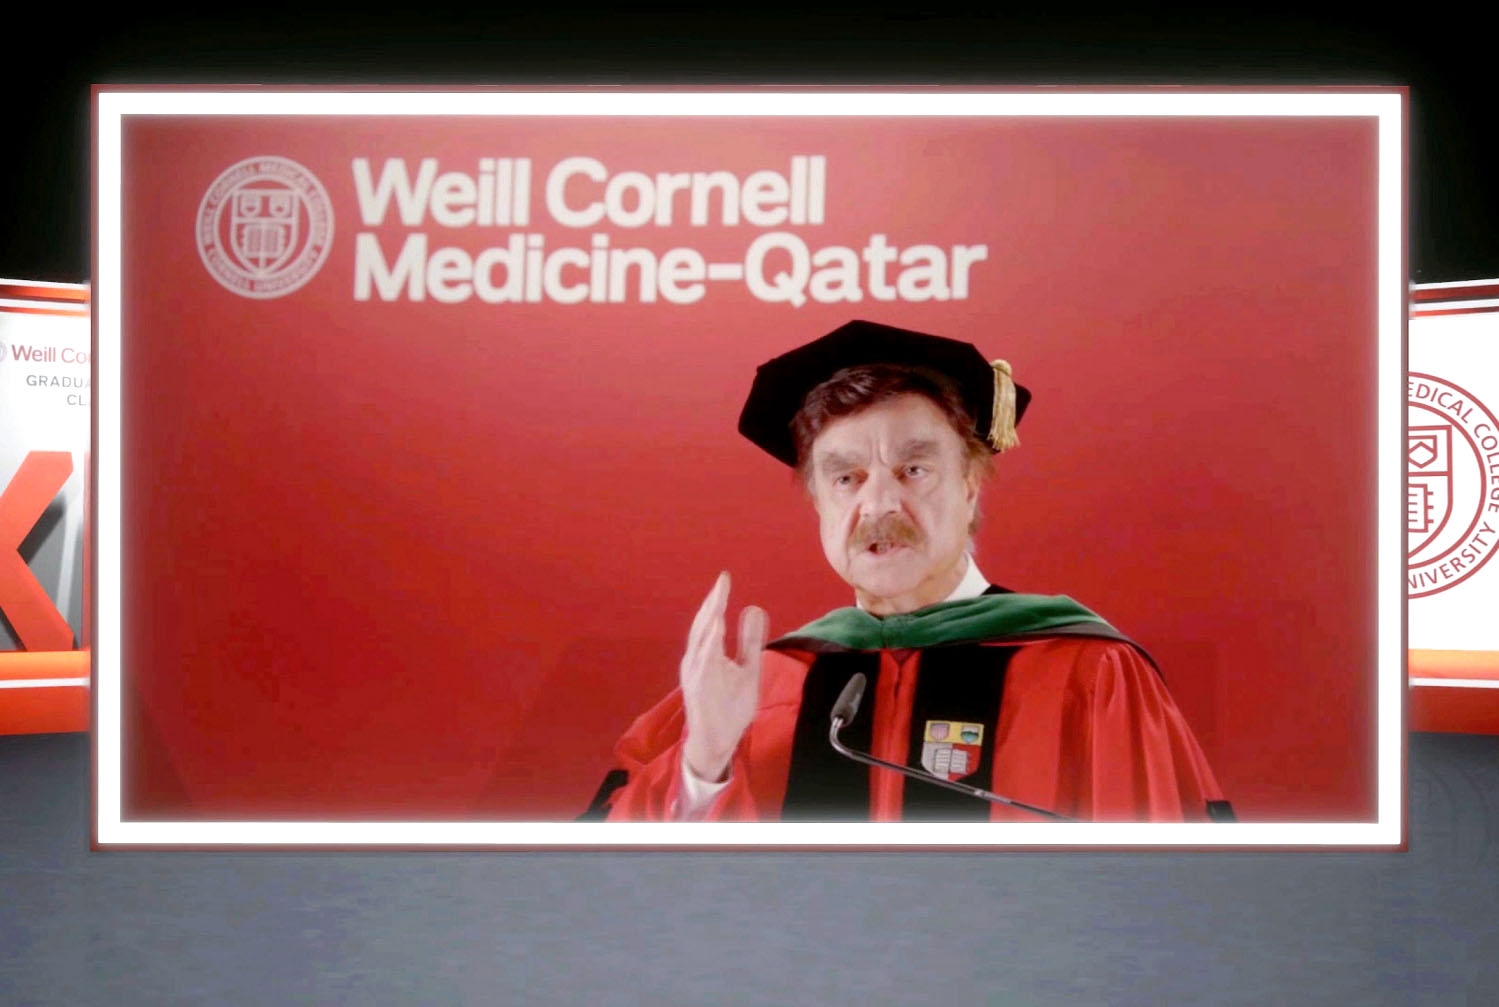 In its 20th Year, Weill Cornell Medicine-Qatar Graduates 42 Doctors, Newsroom